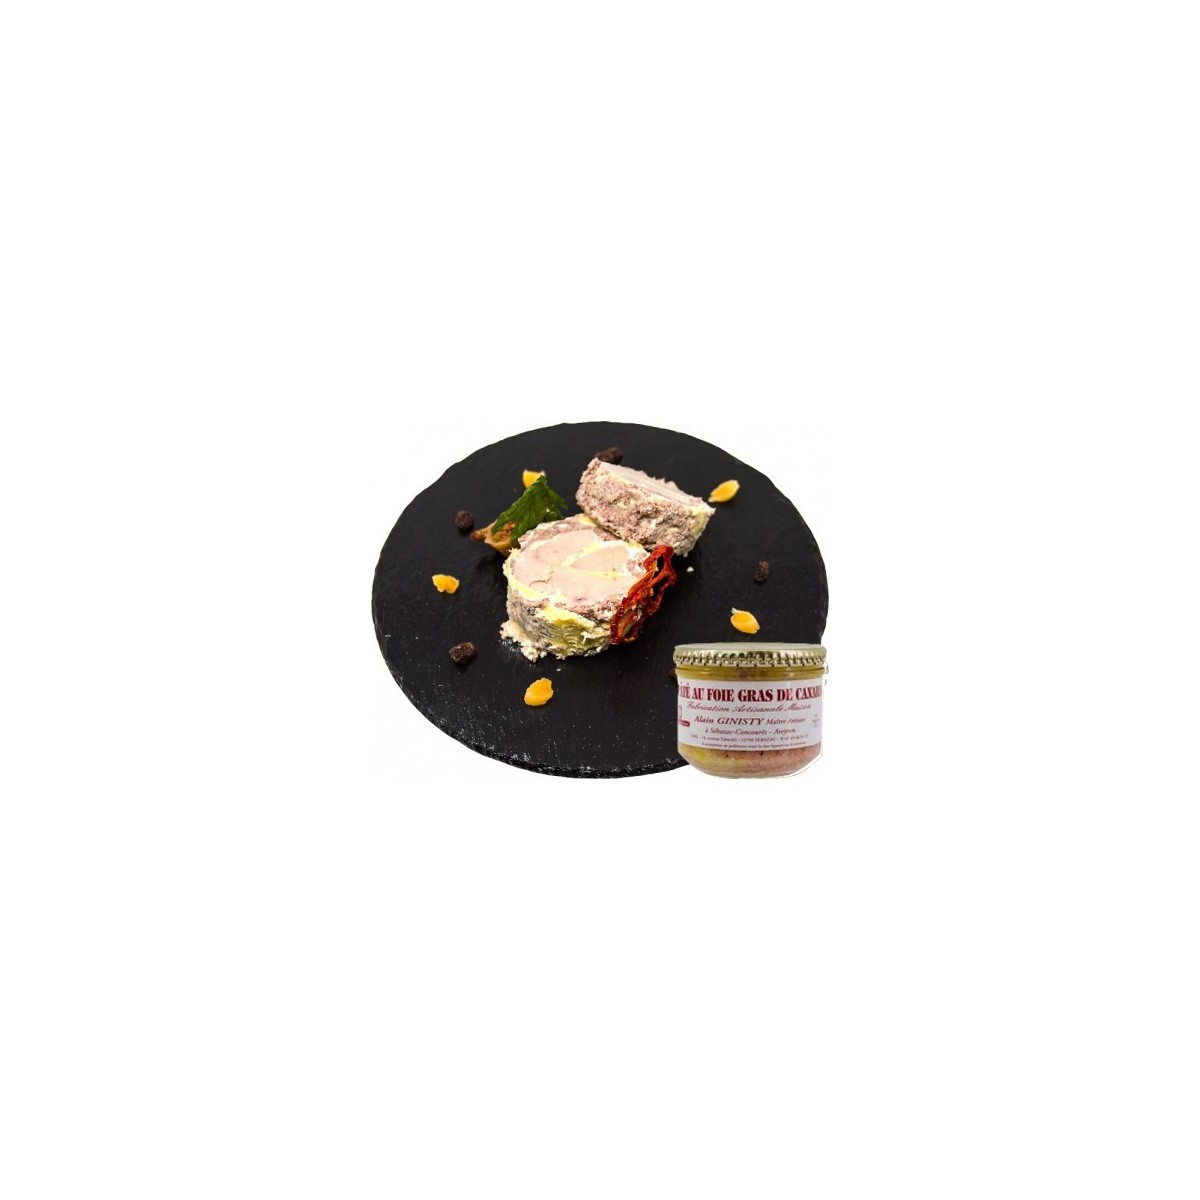 Pâté au foie gras de canard (20%)